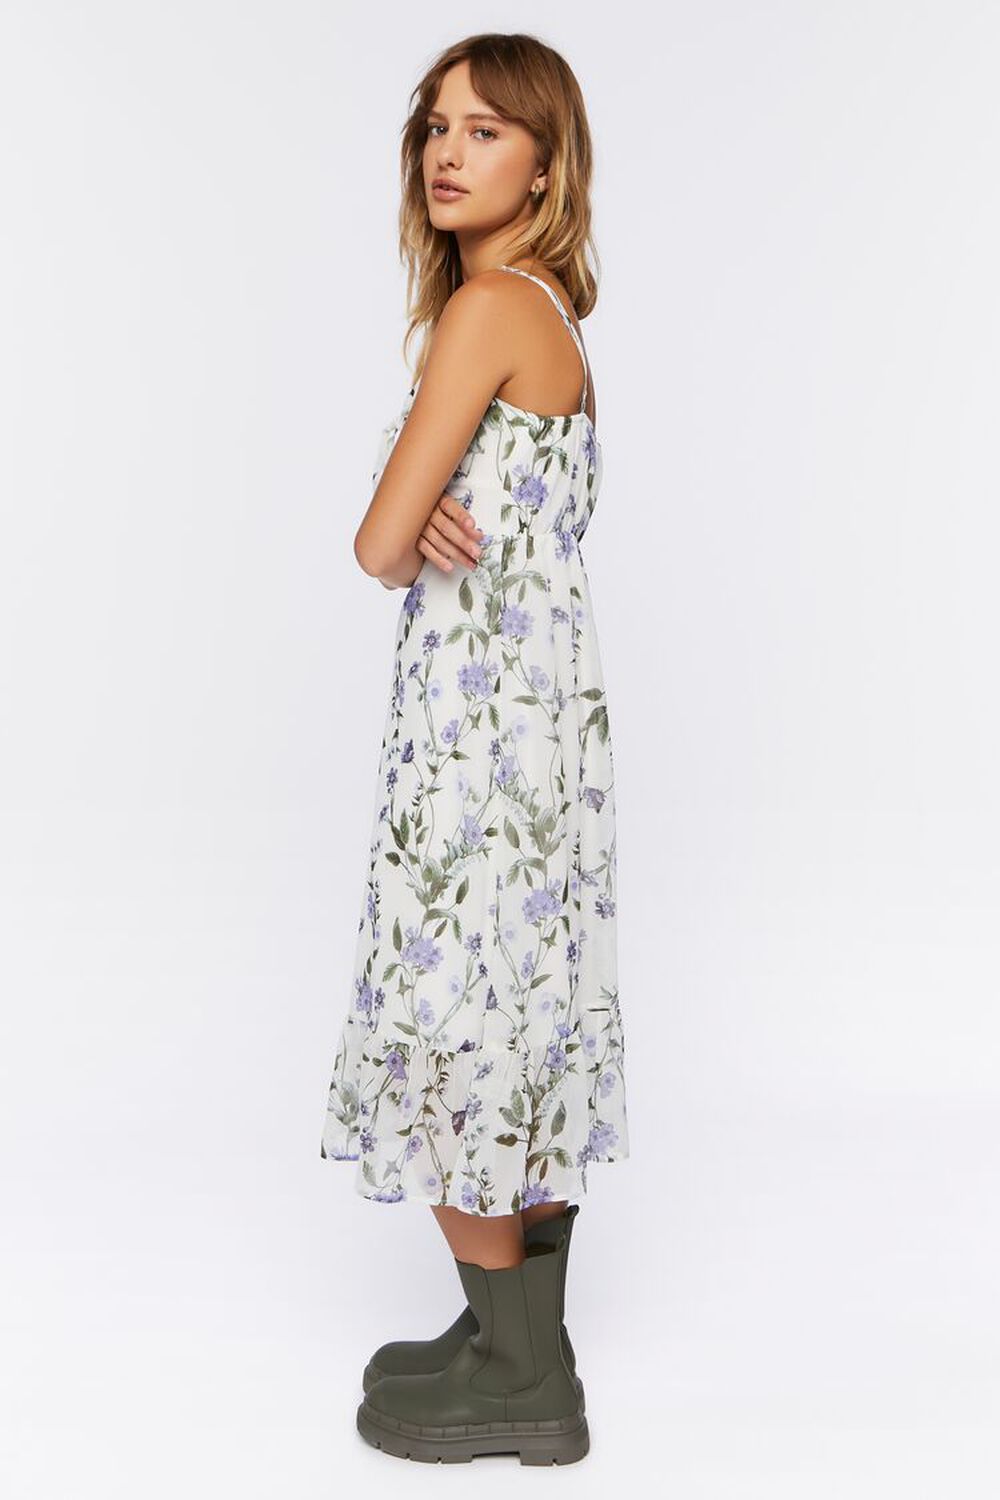 WHITE/MULTI Floral Print Midi Dress, image 2